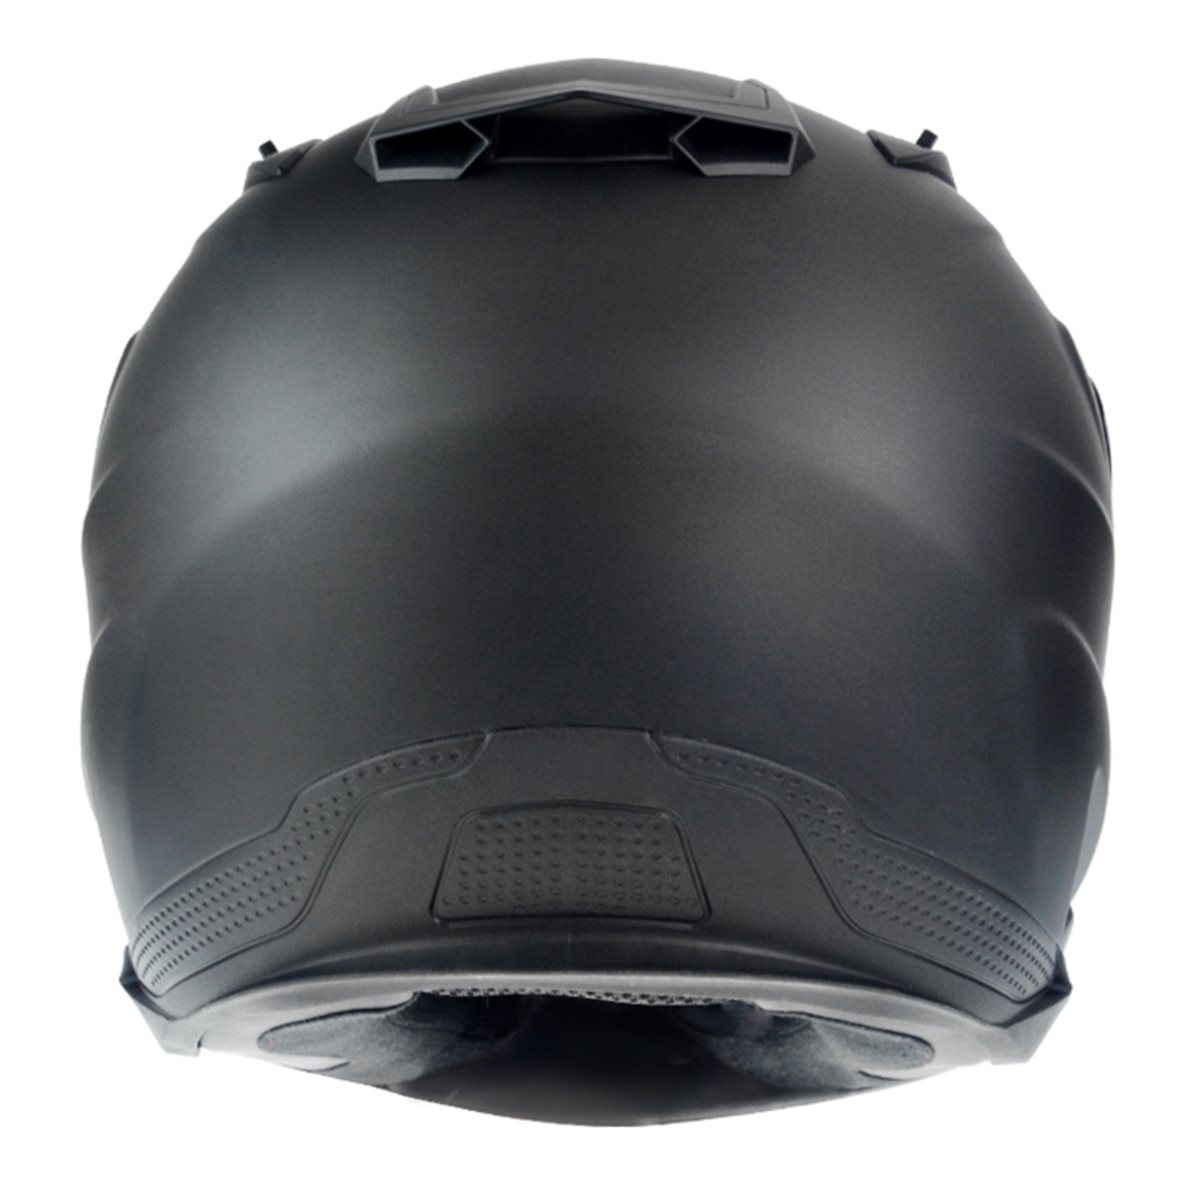 M2R 騎乘機車用全罩式防護頭盔 M-3 消光黑 M